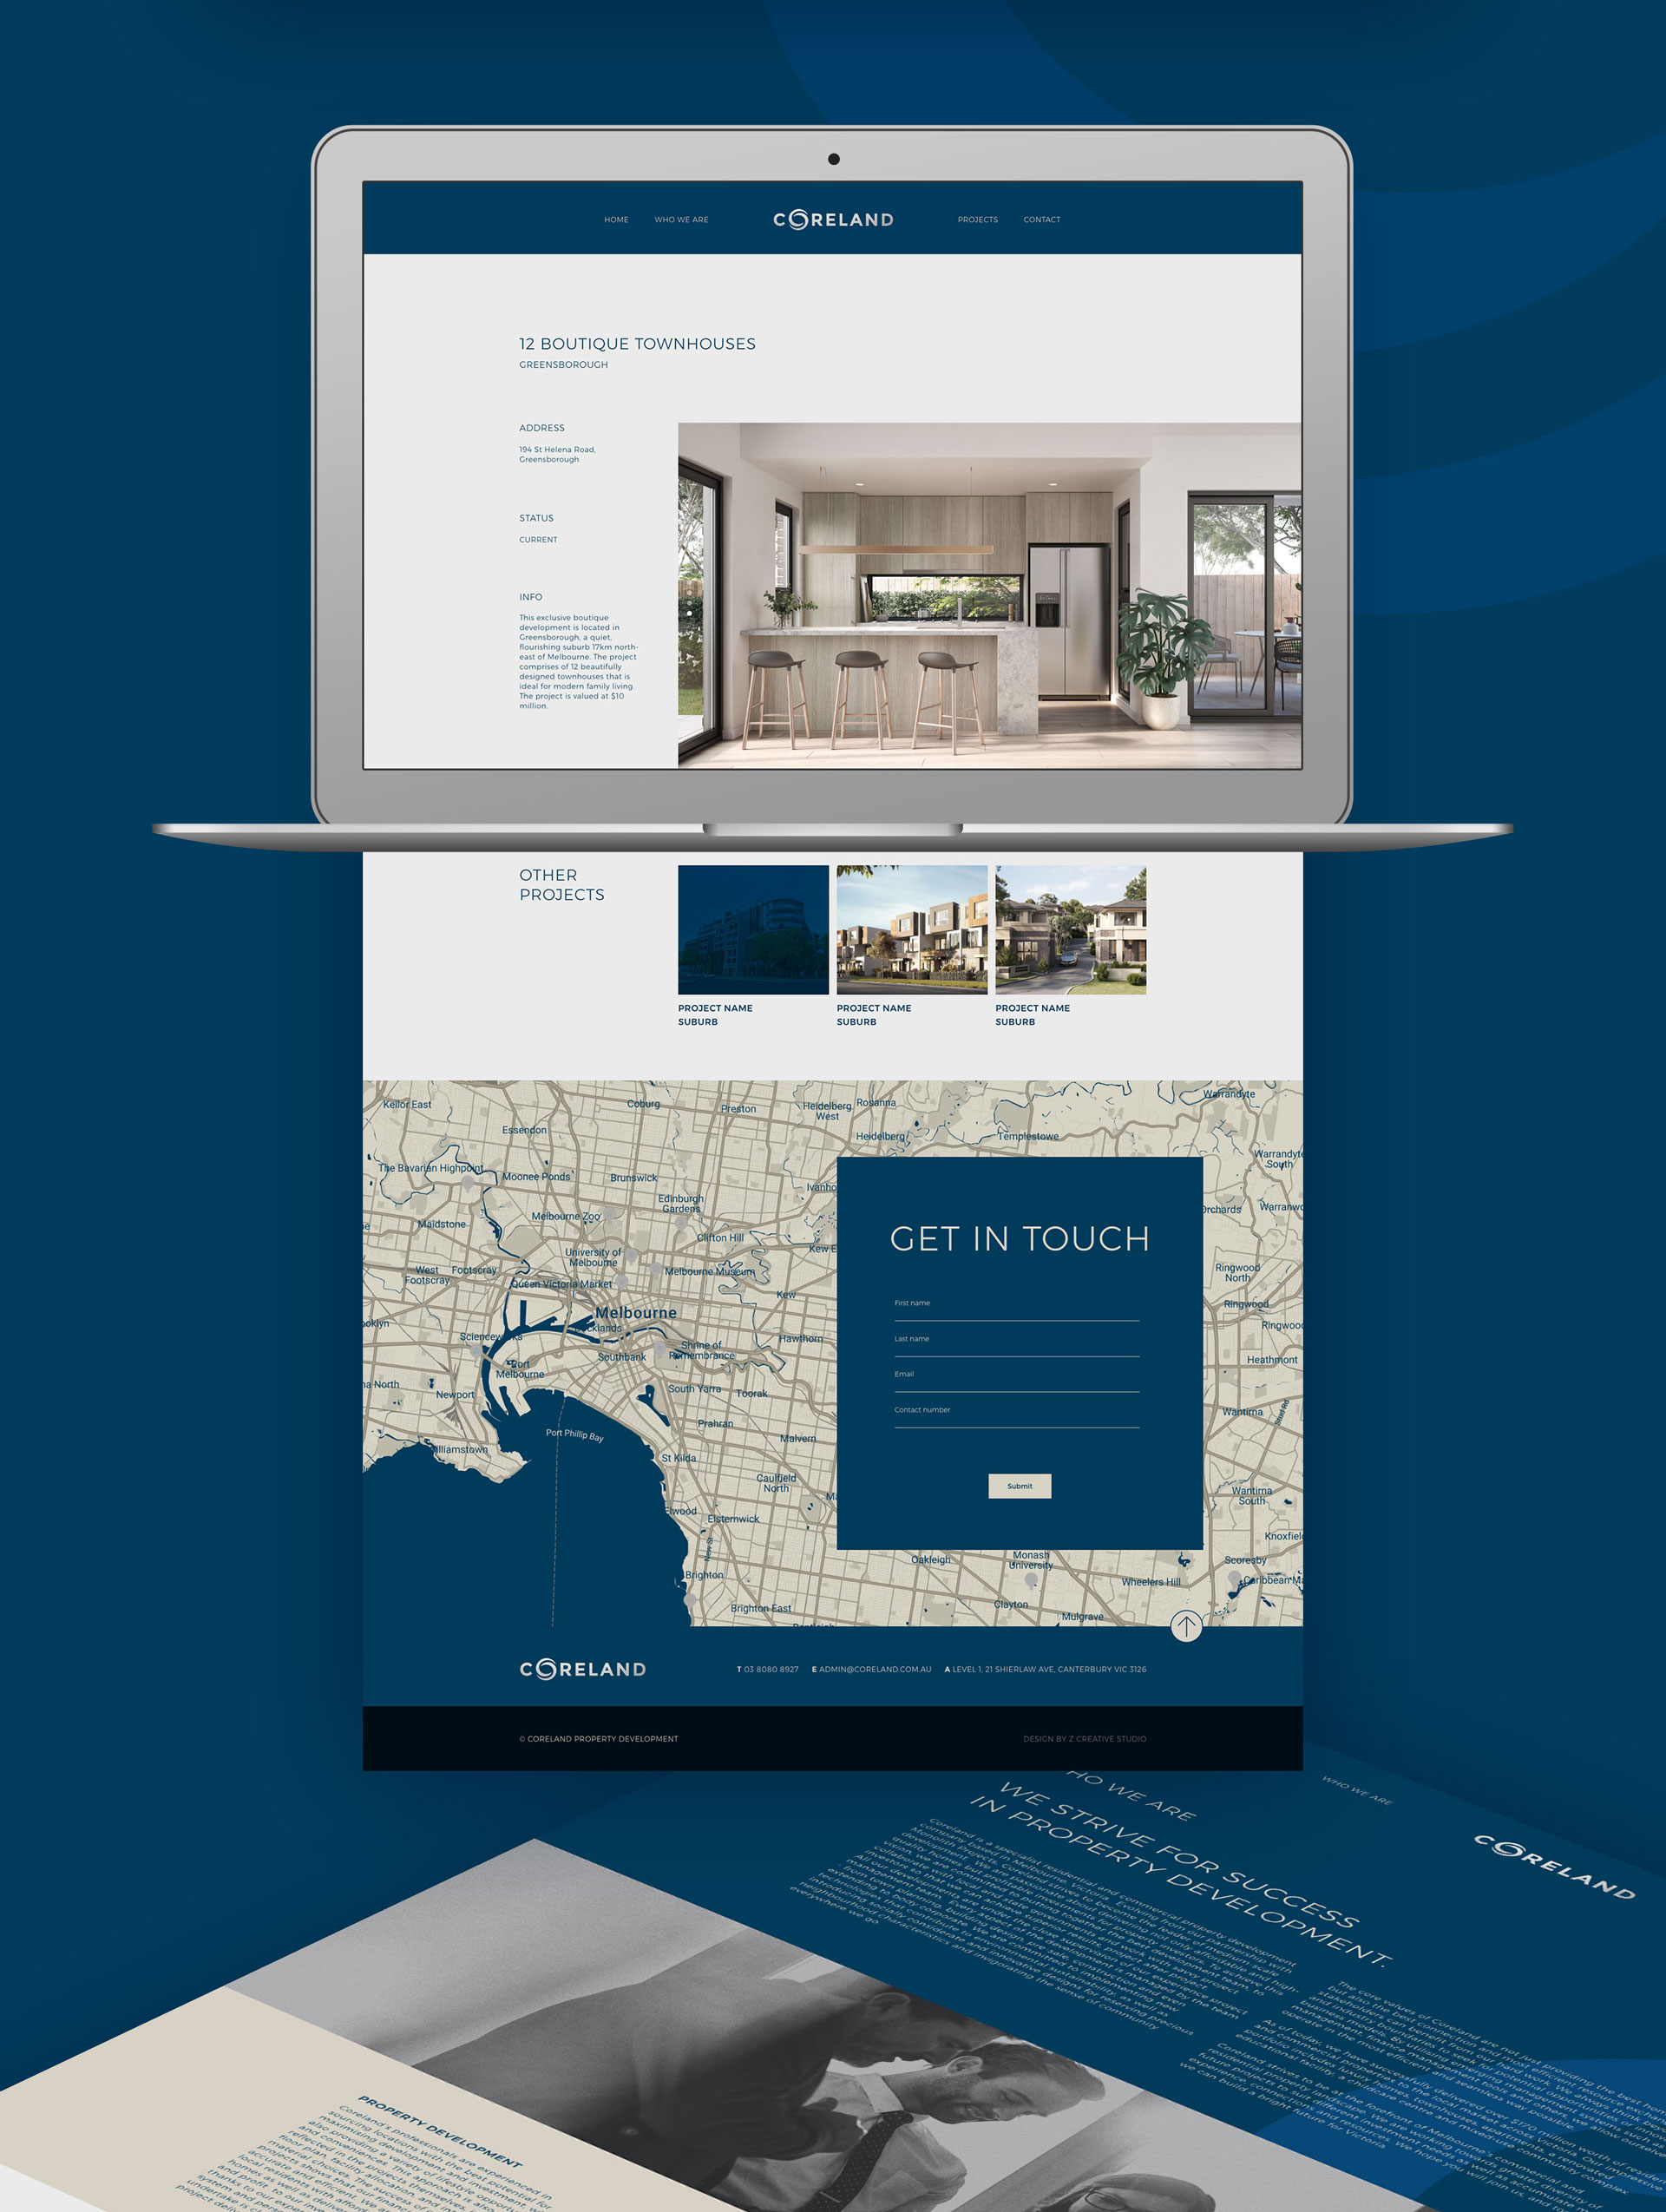 property developer webdesign by Z Creative Studio Branding & Graphic Design Melbourne